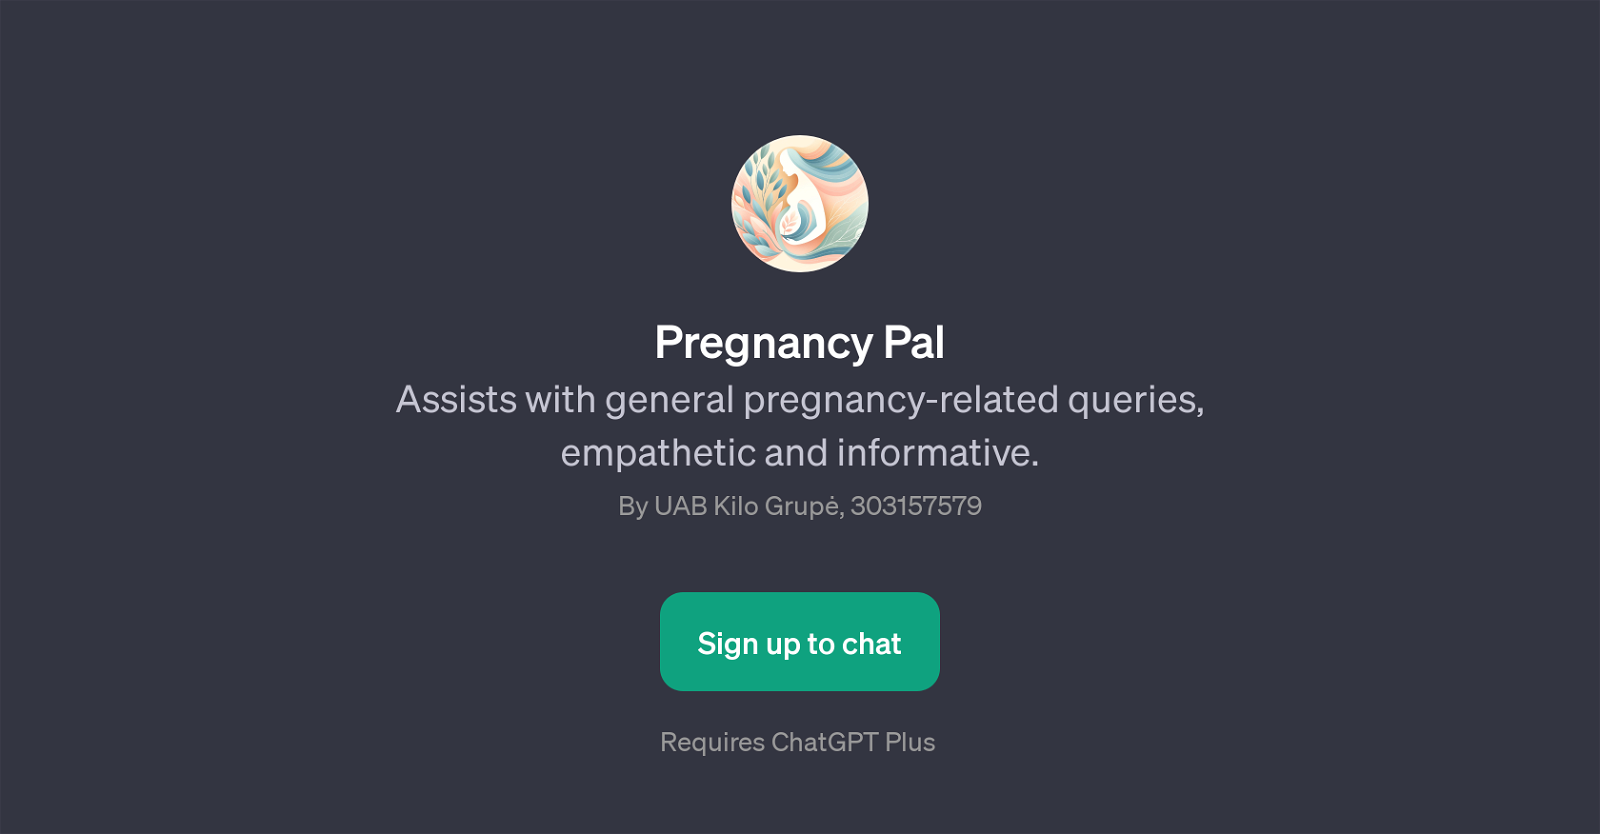 Pregnancy Pal website